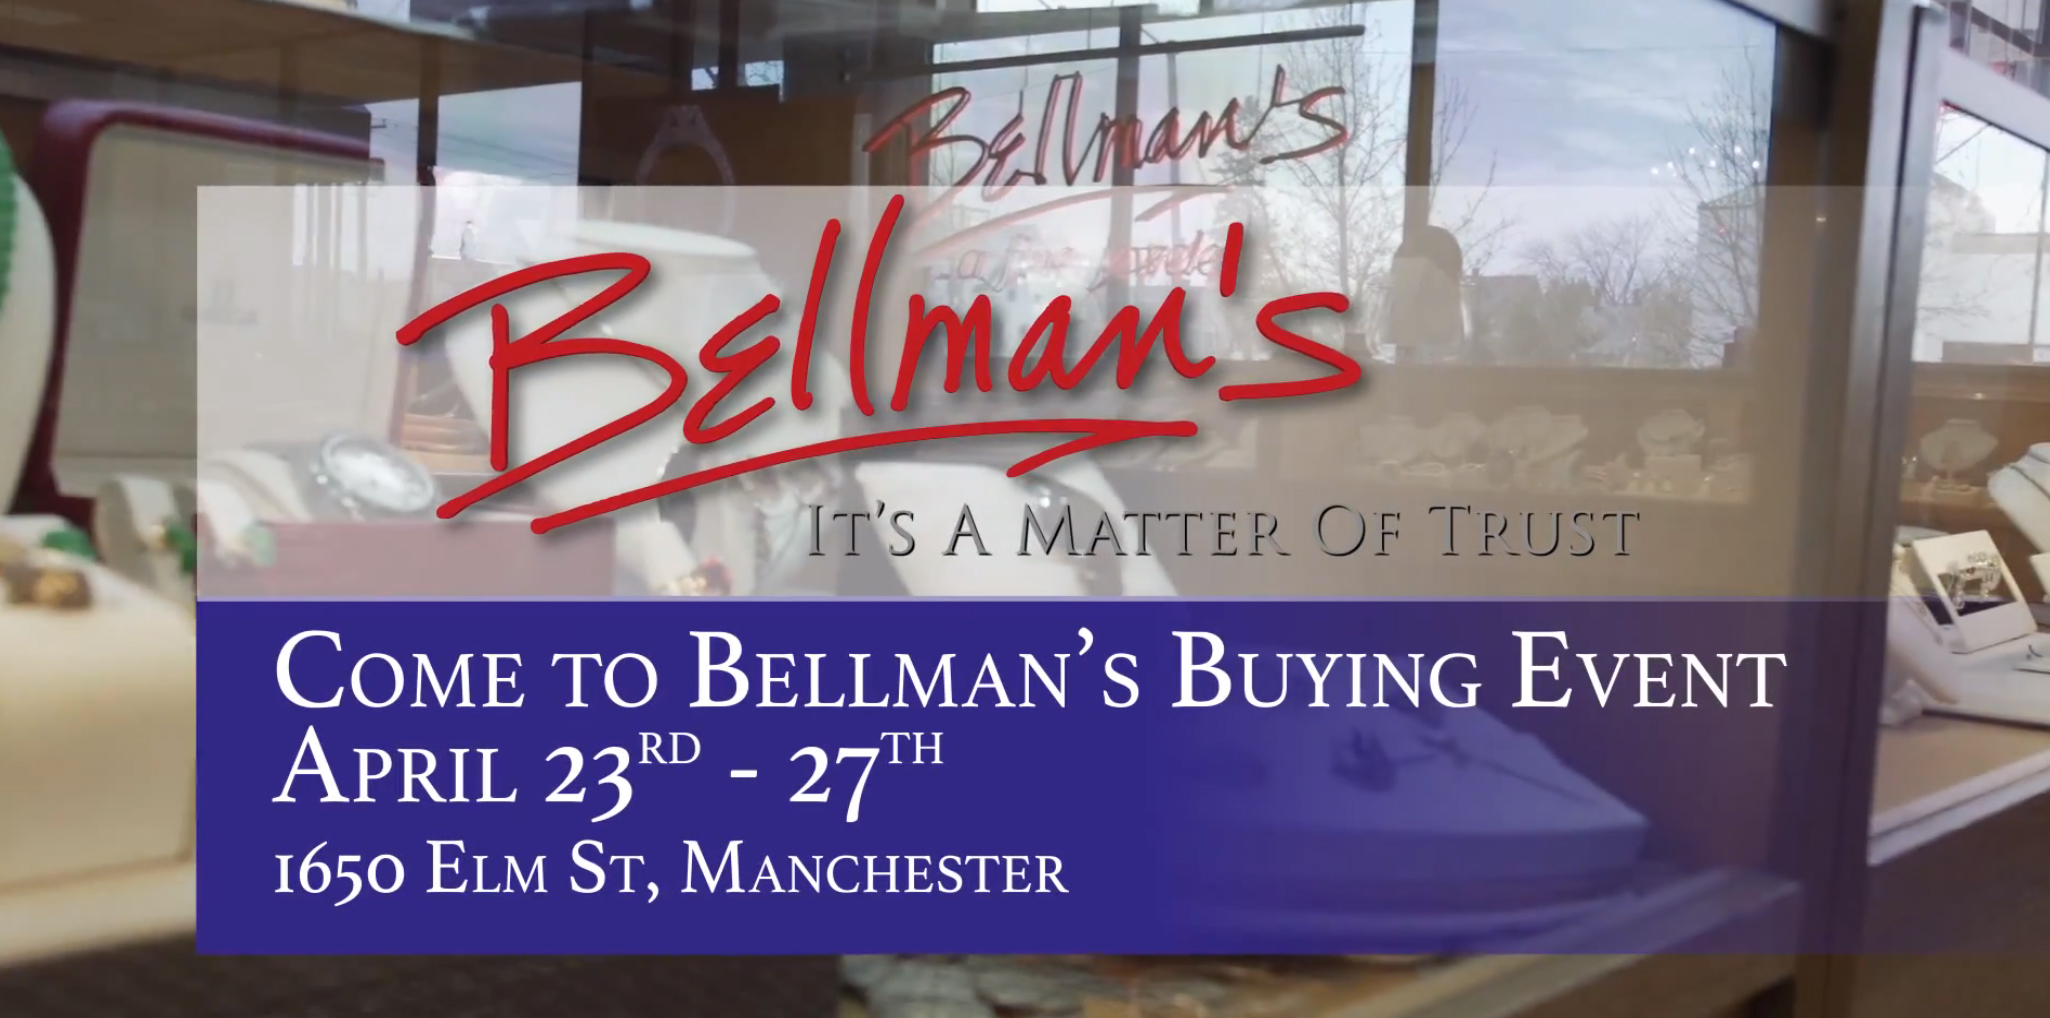 Bellman's Jewelers